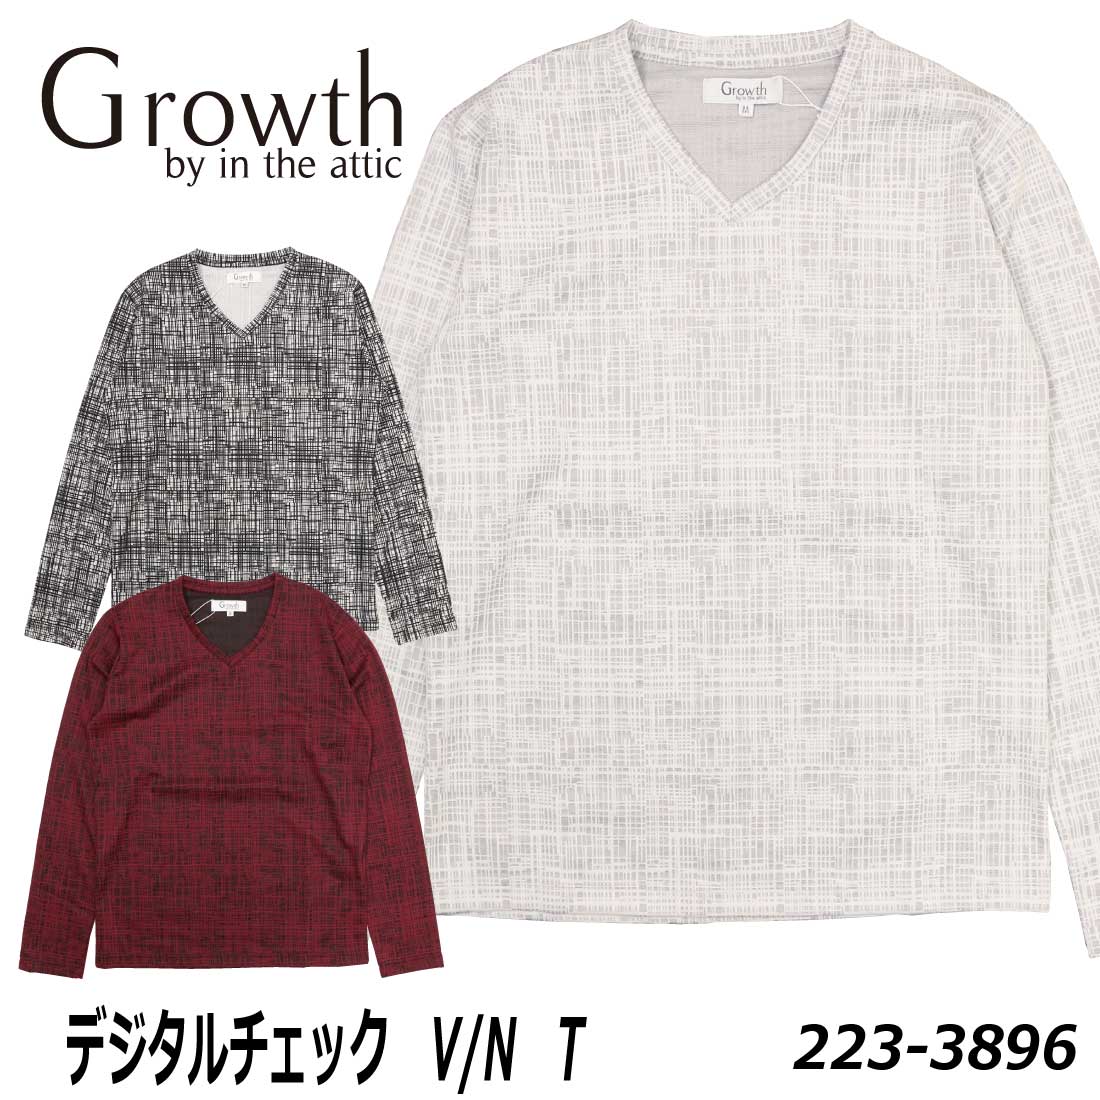 Growth by in the attic 長袖 カットソー 223-3896 デジタル チェック Vネック Tシャツ メンズ 掠め風